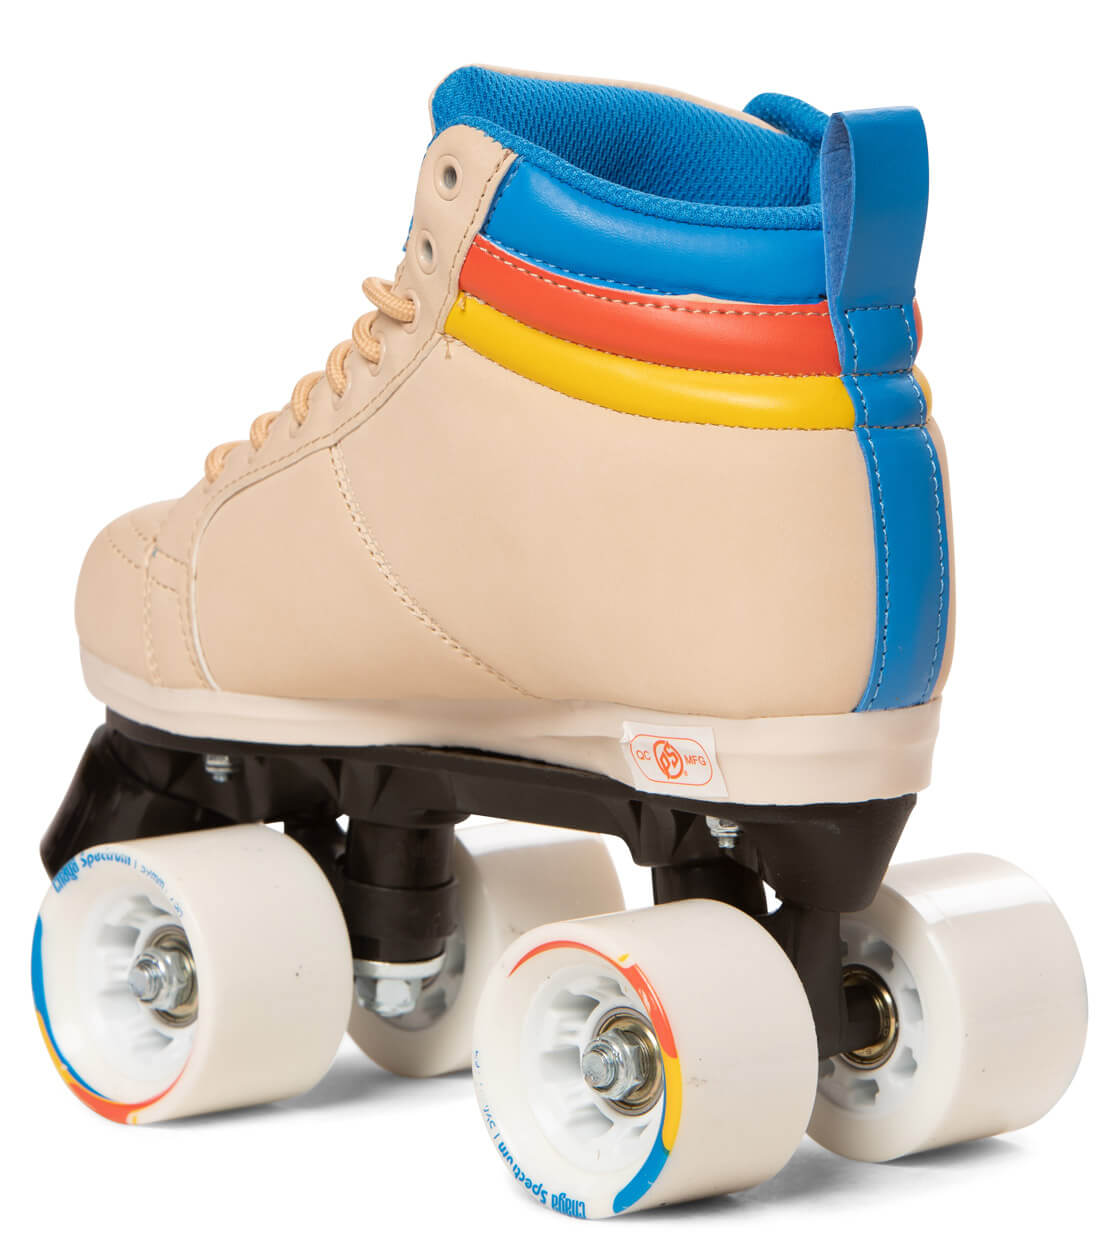 CHAYA roller skates SUNSET BEACH - 2 